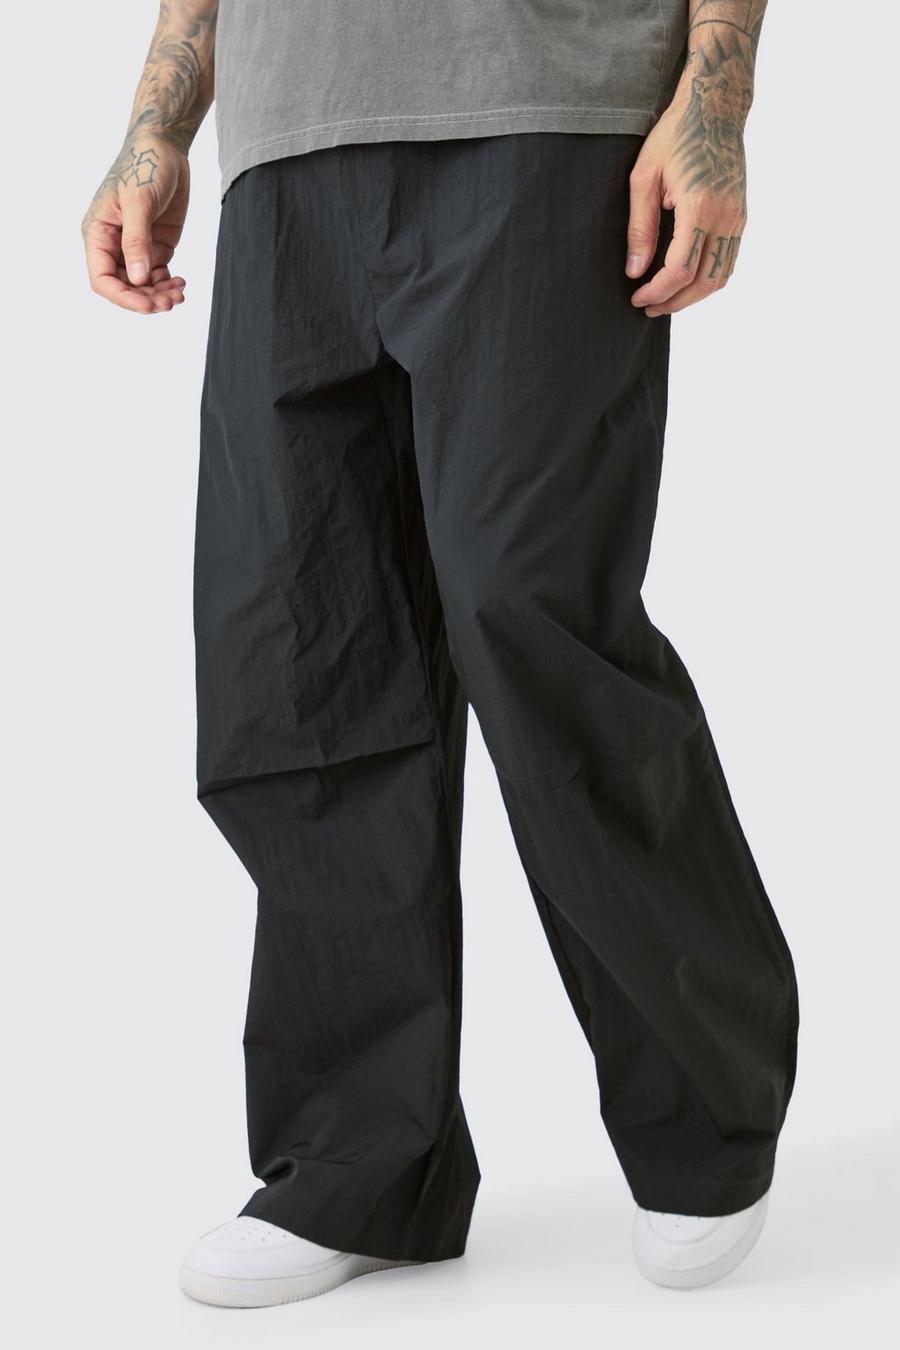 Black Tall Oversize parachute pants